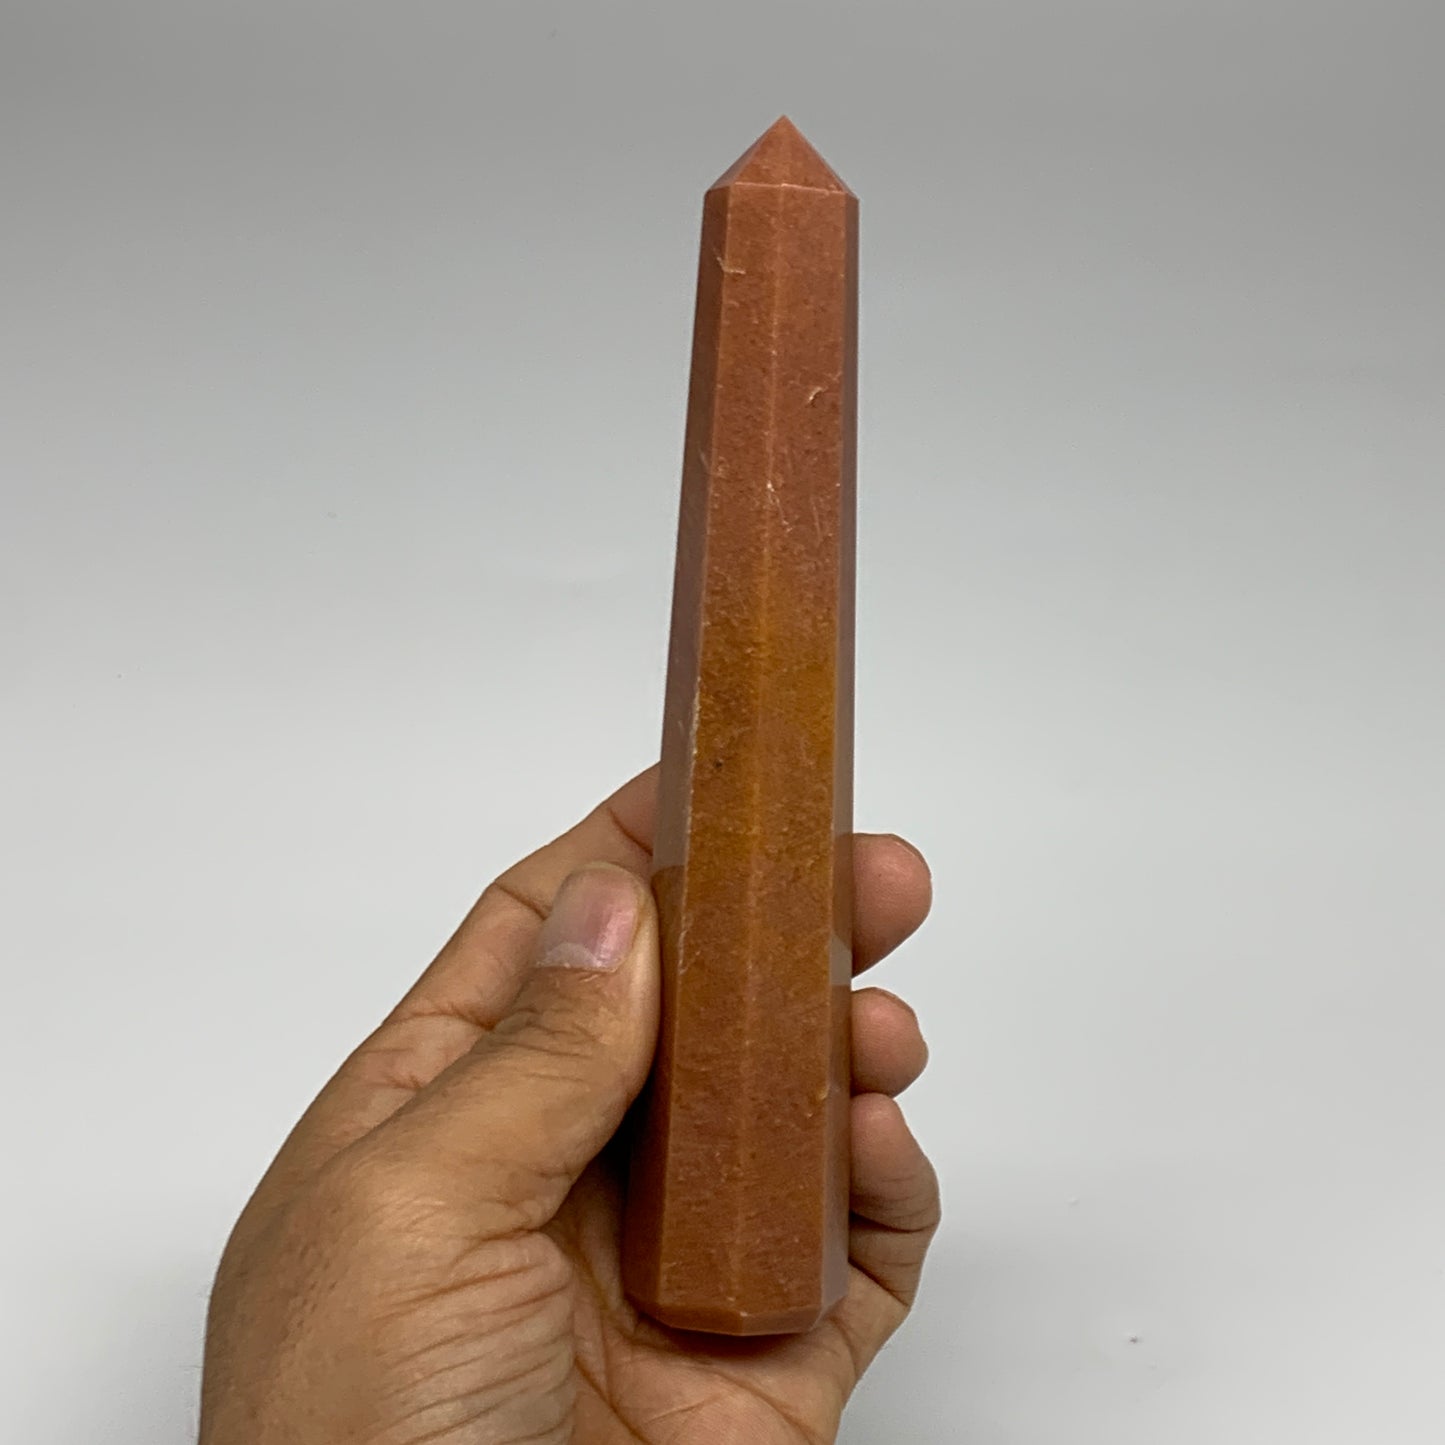 158.9g, 5.8"x1.1"x1.1" Red Aventurine Tower Obelisk Point Crystal @India,B31561